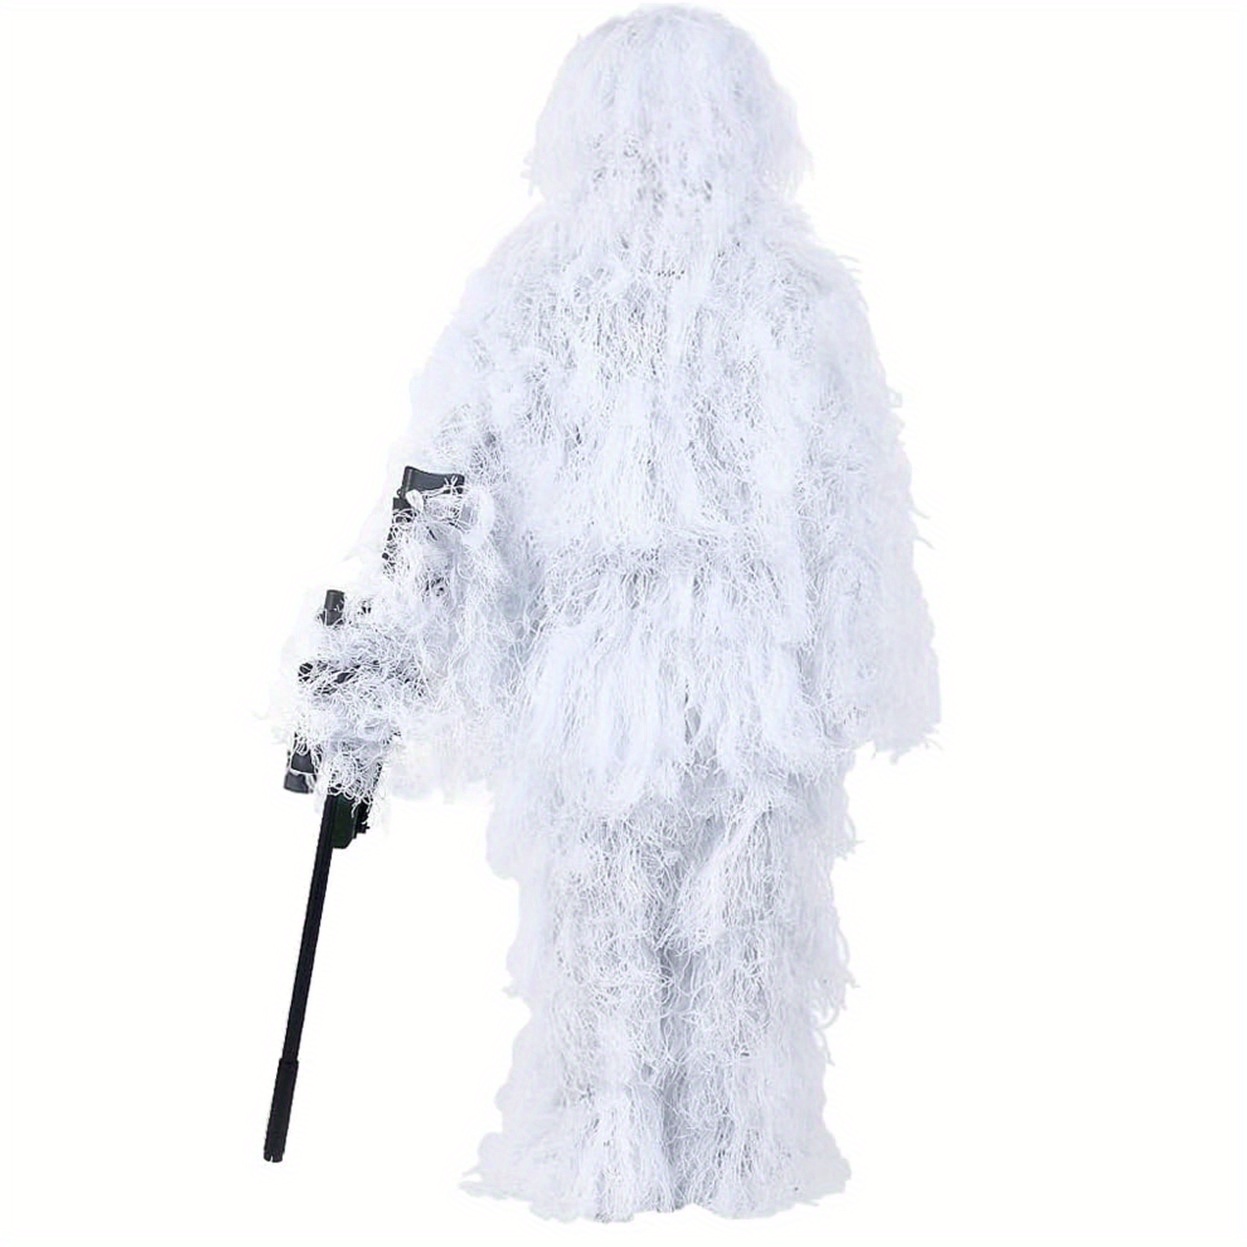 White Snow Suit Ghillie Suit Set Hunting Suit Clothing Adult 